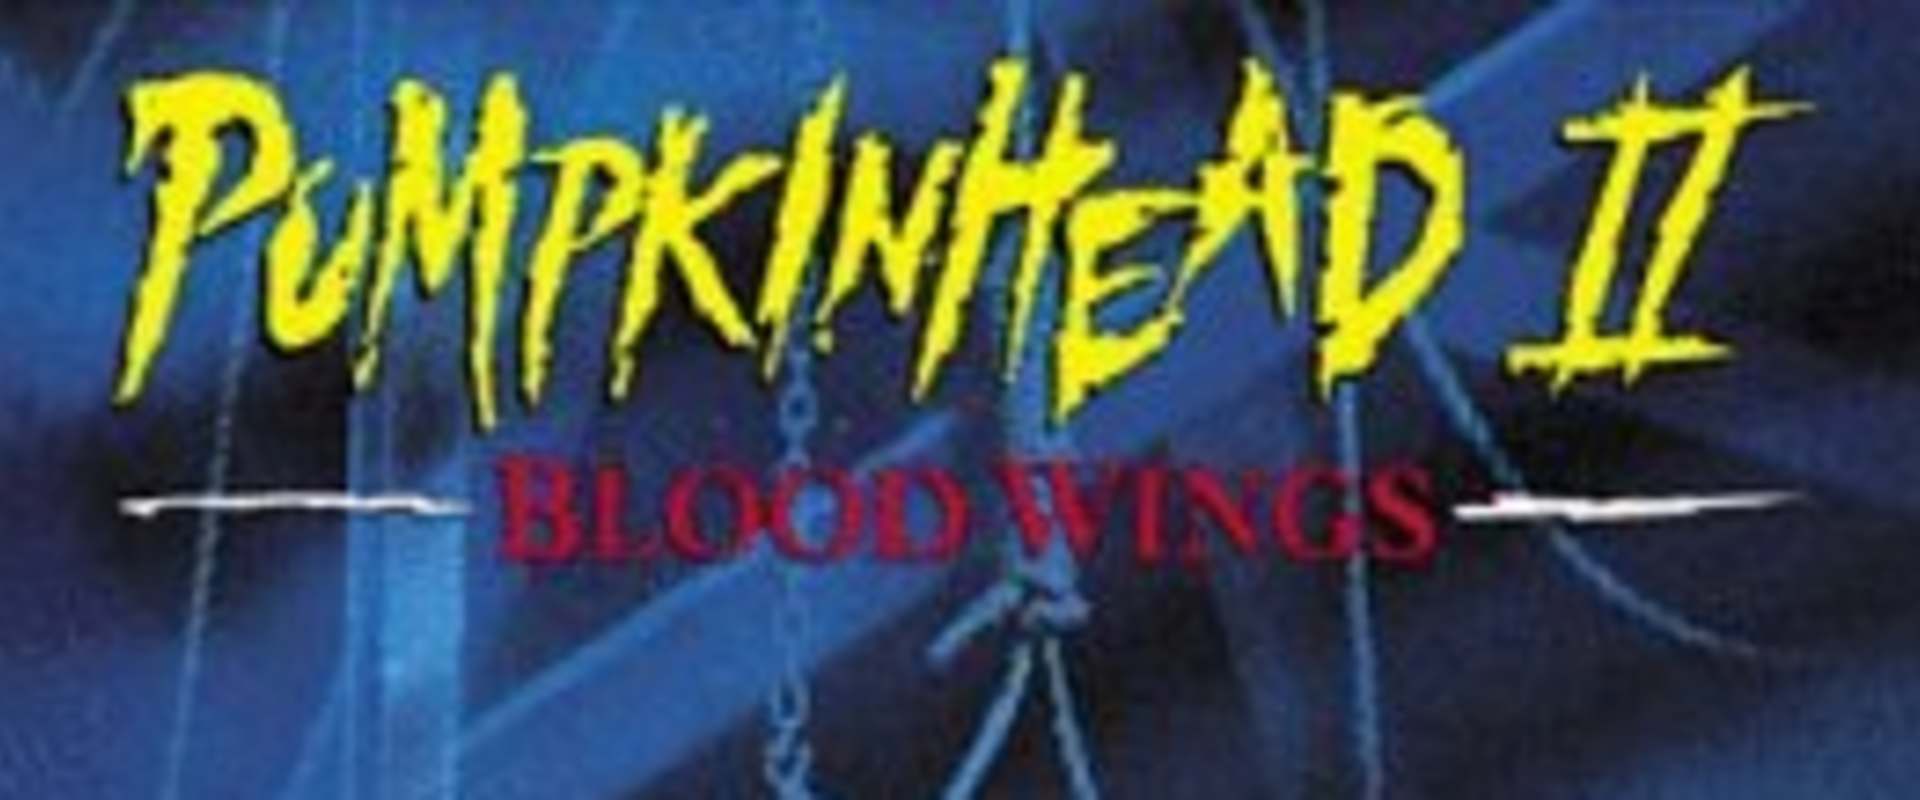 Pumpkinhead II: Blood Wings background 2